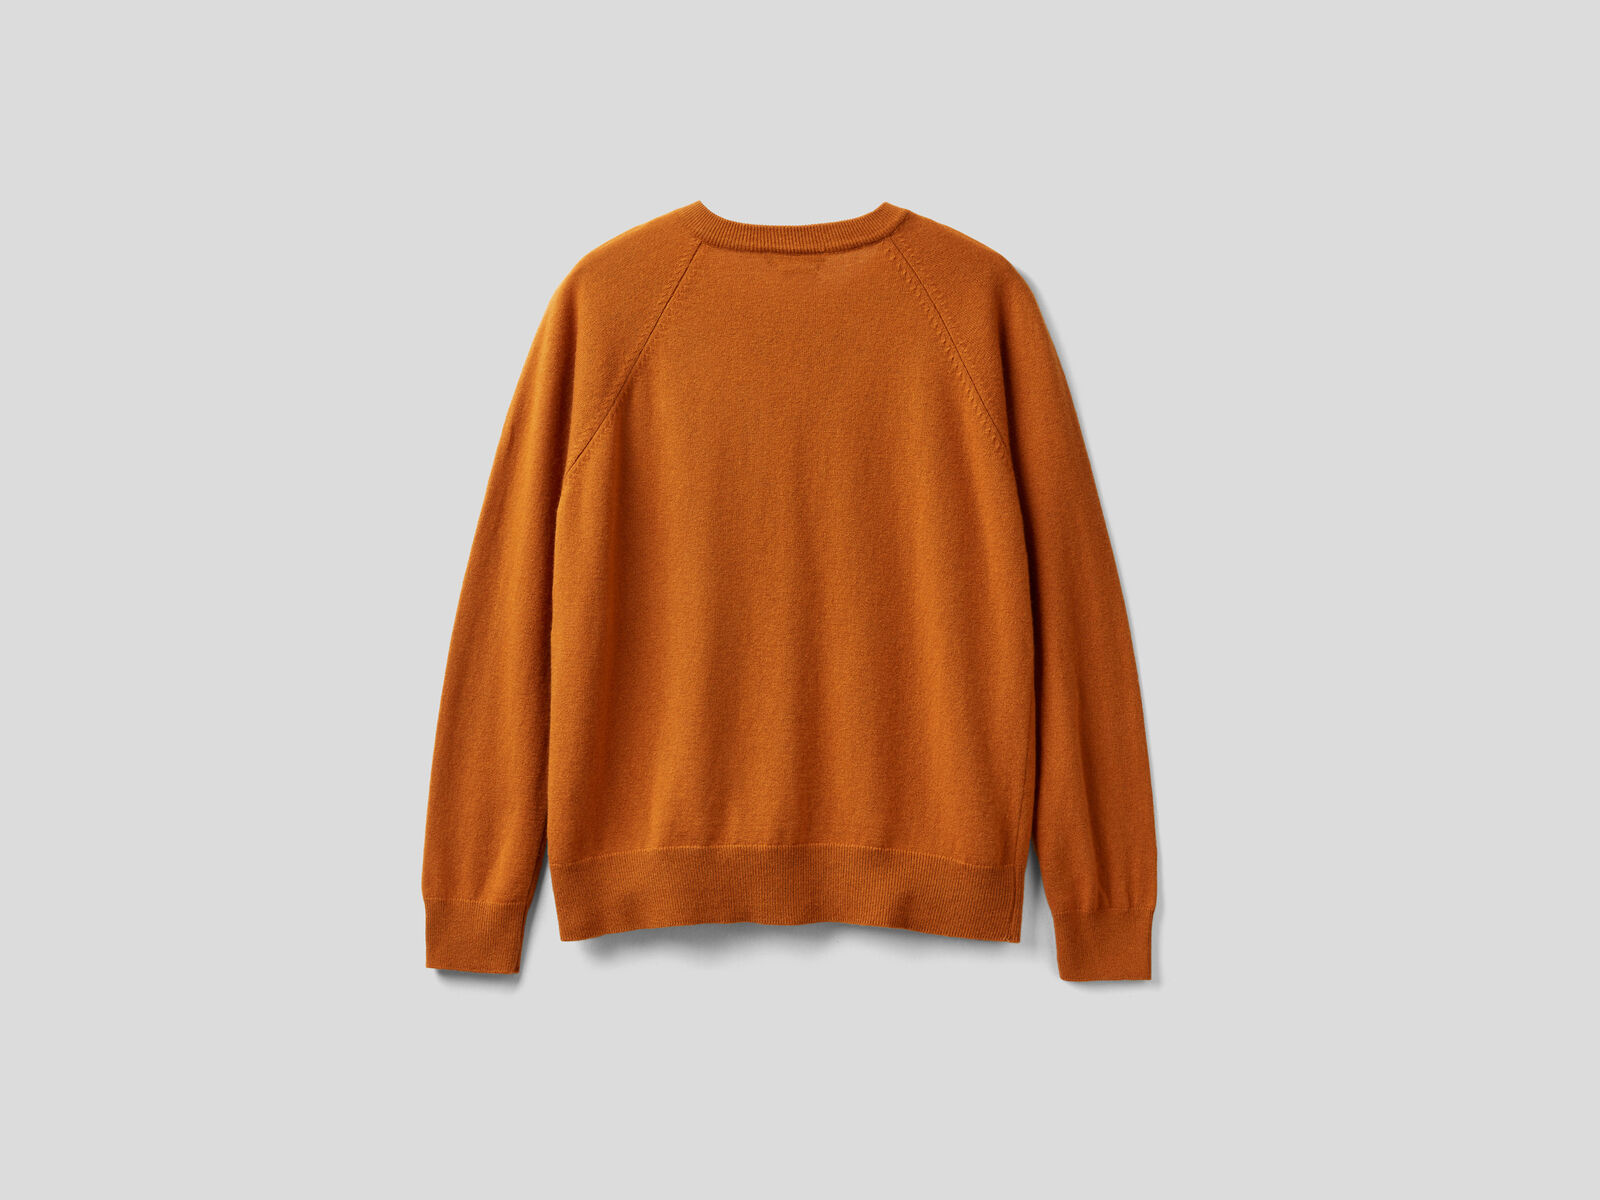 Orange cardigan in wool blend - Orange